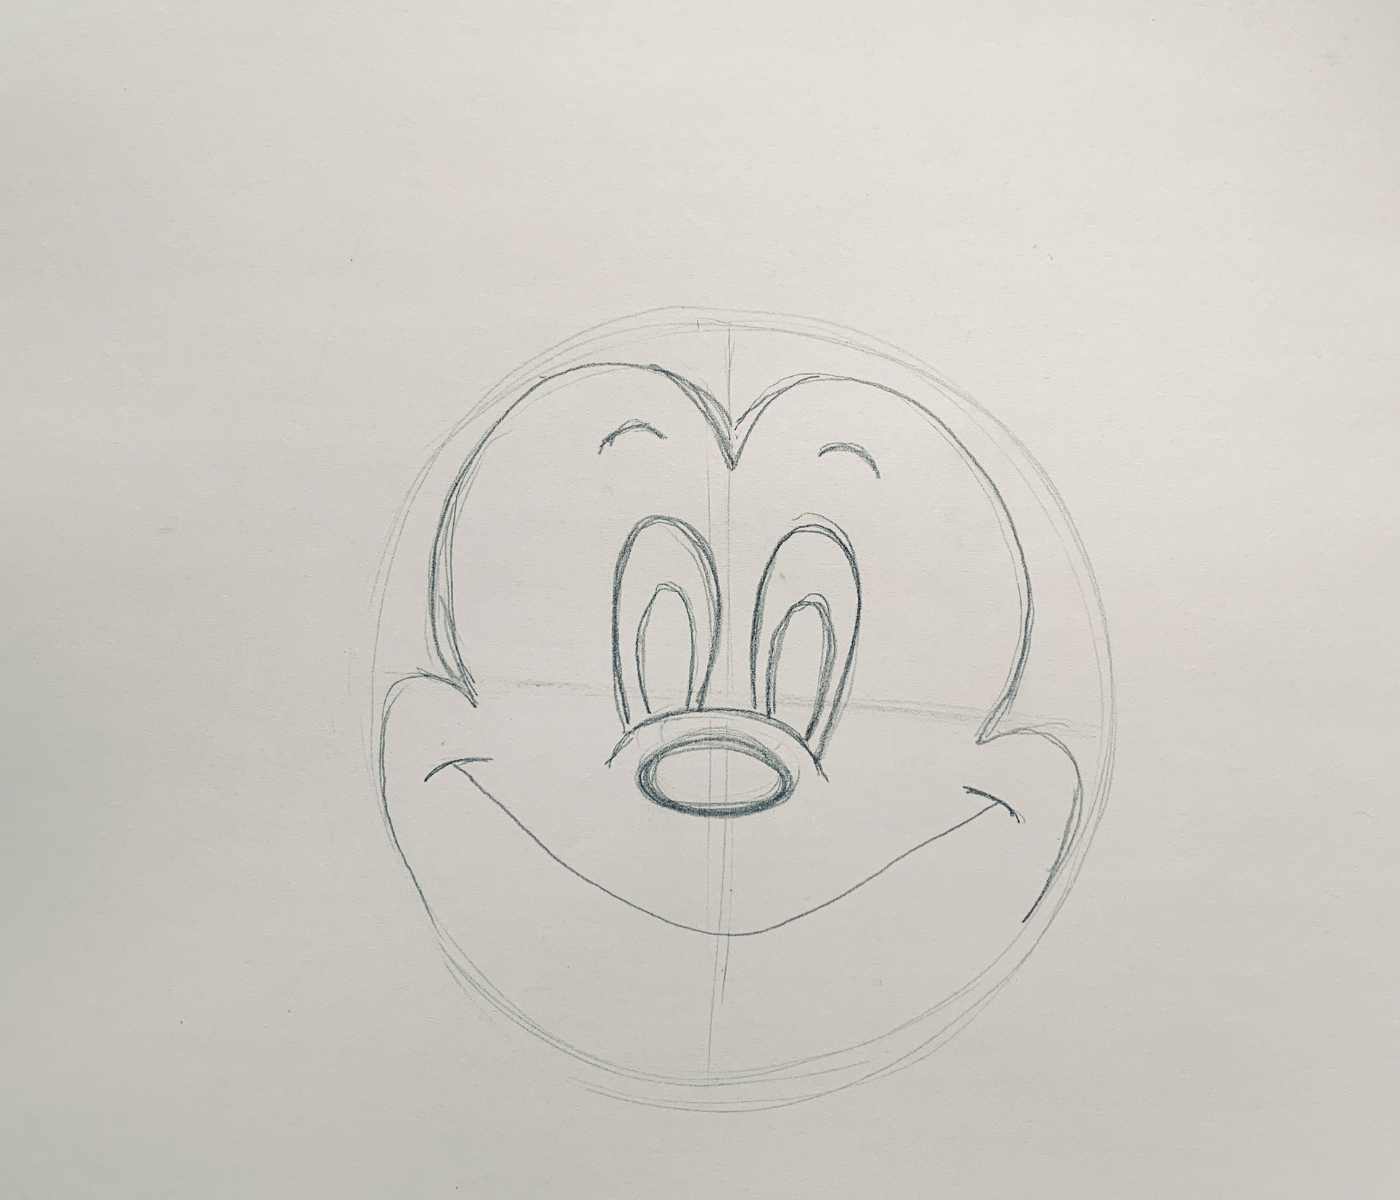 Disneyland drawing ideas